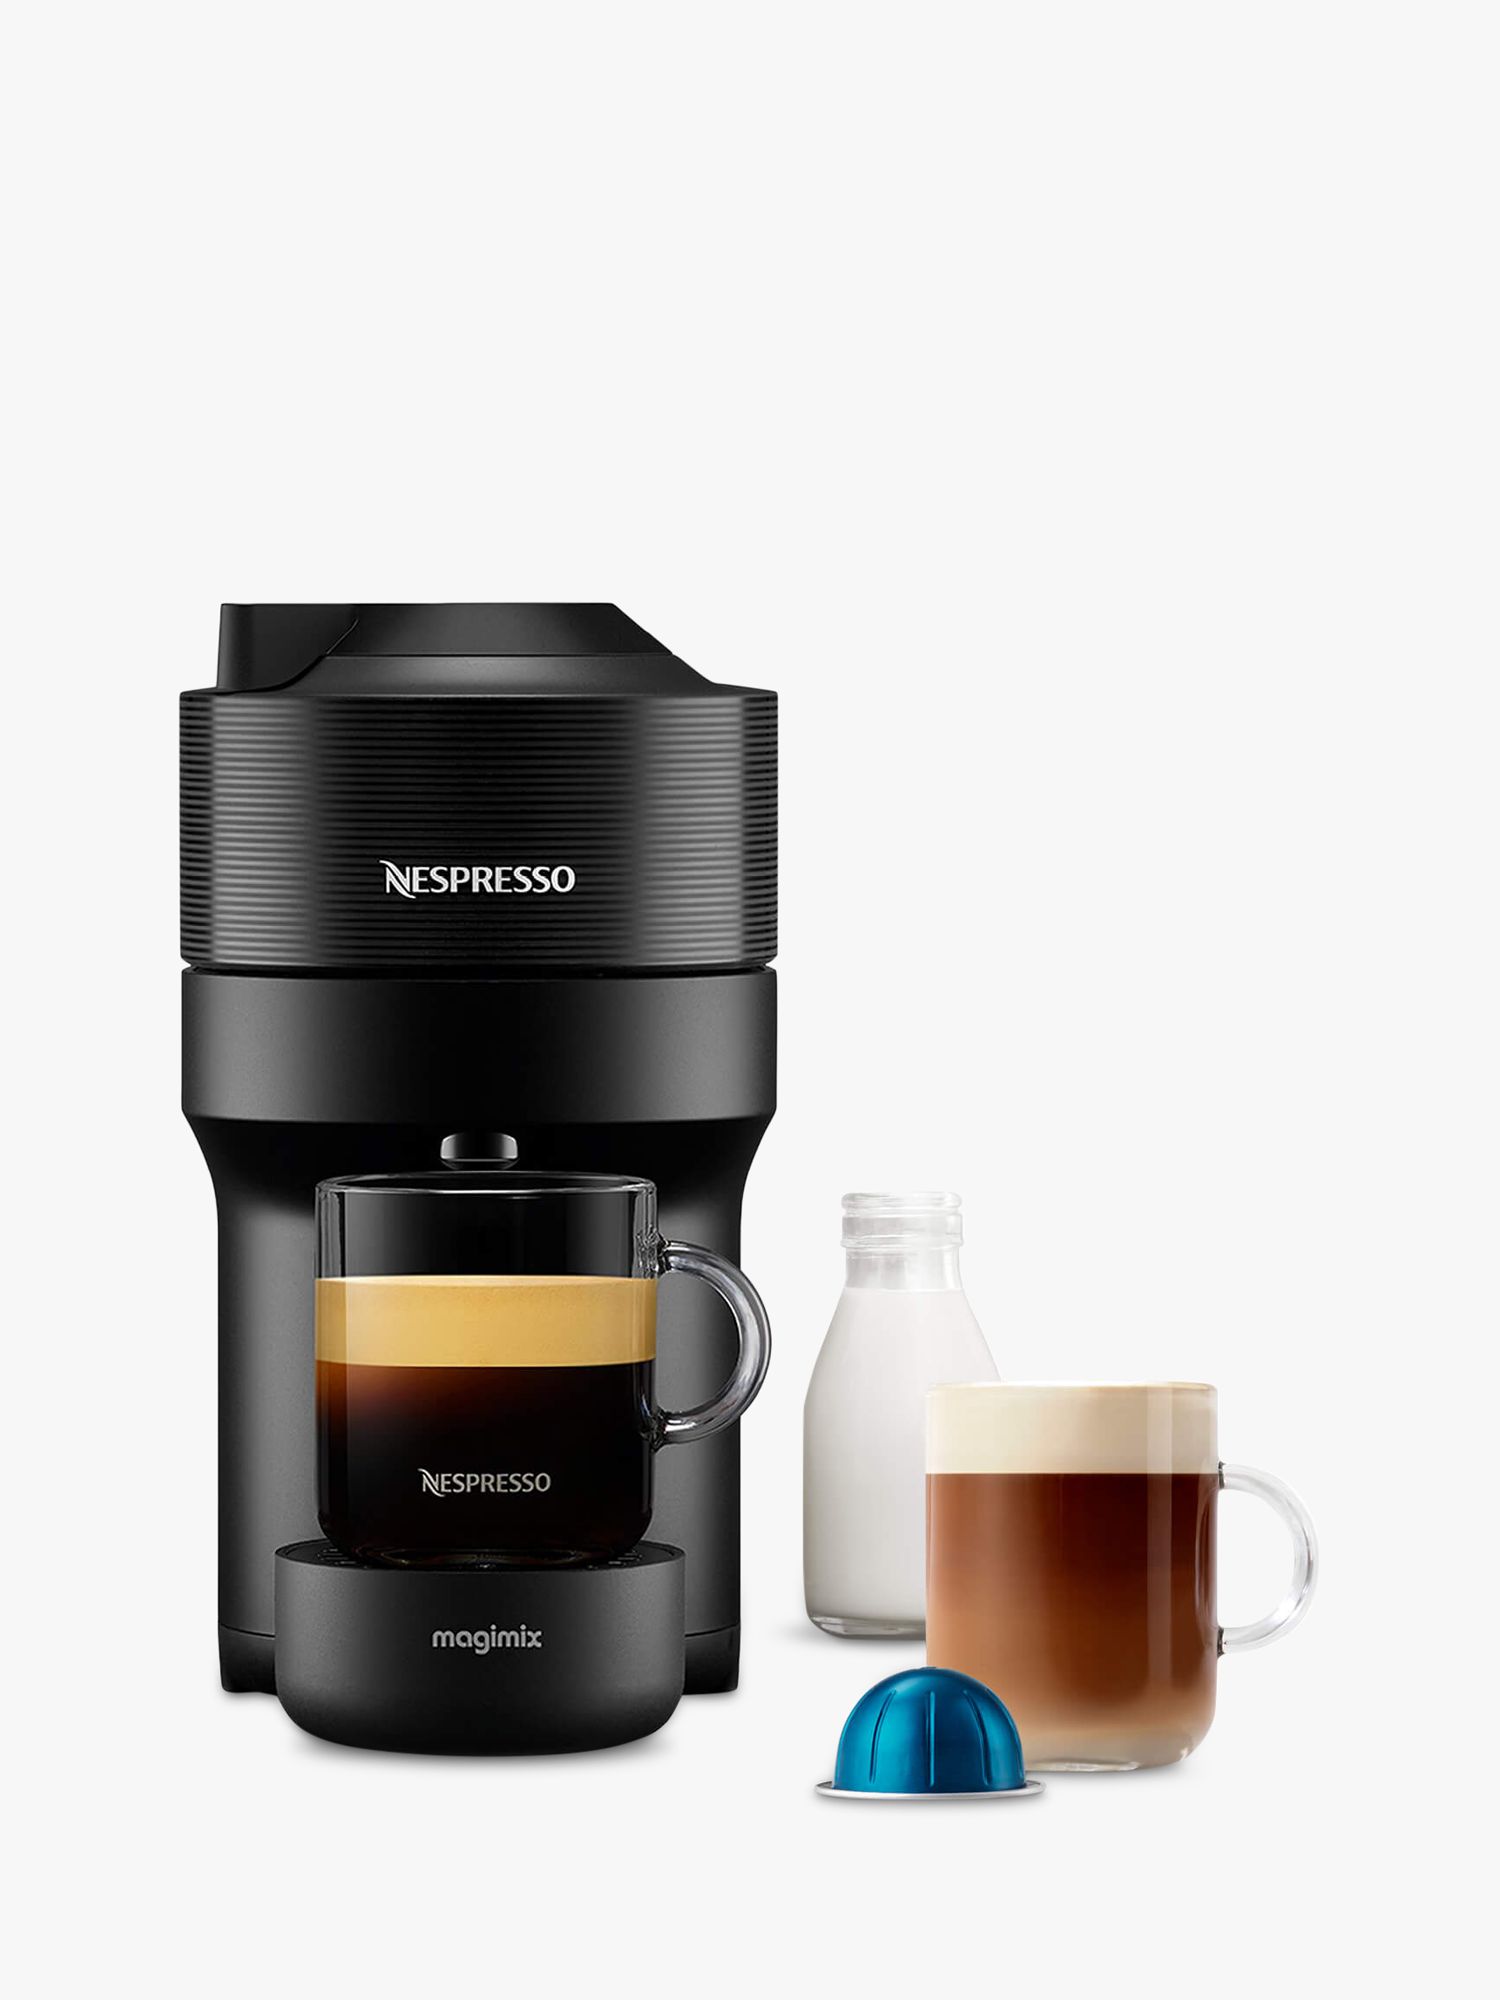 Nespresso Vertuo Pop Coffee Pod Machine by Magimix, Liquorice Black